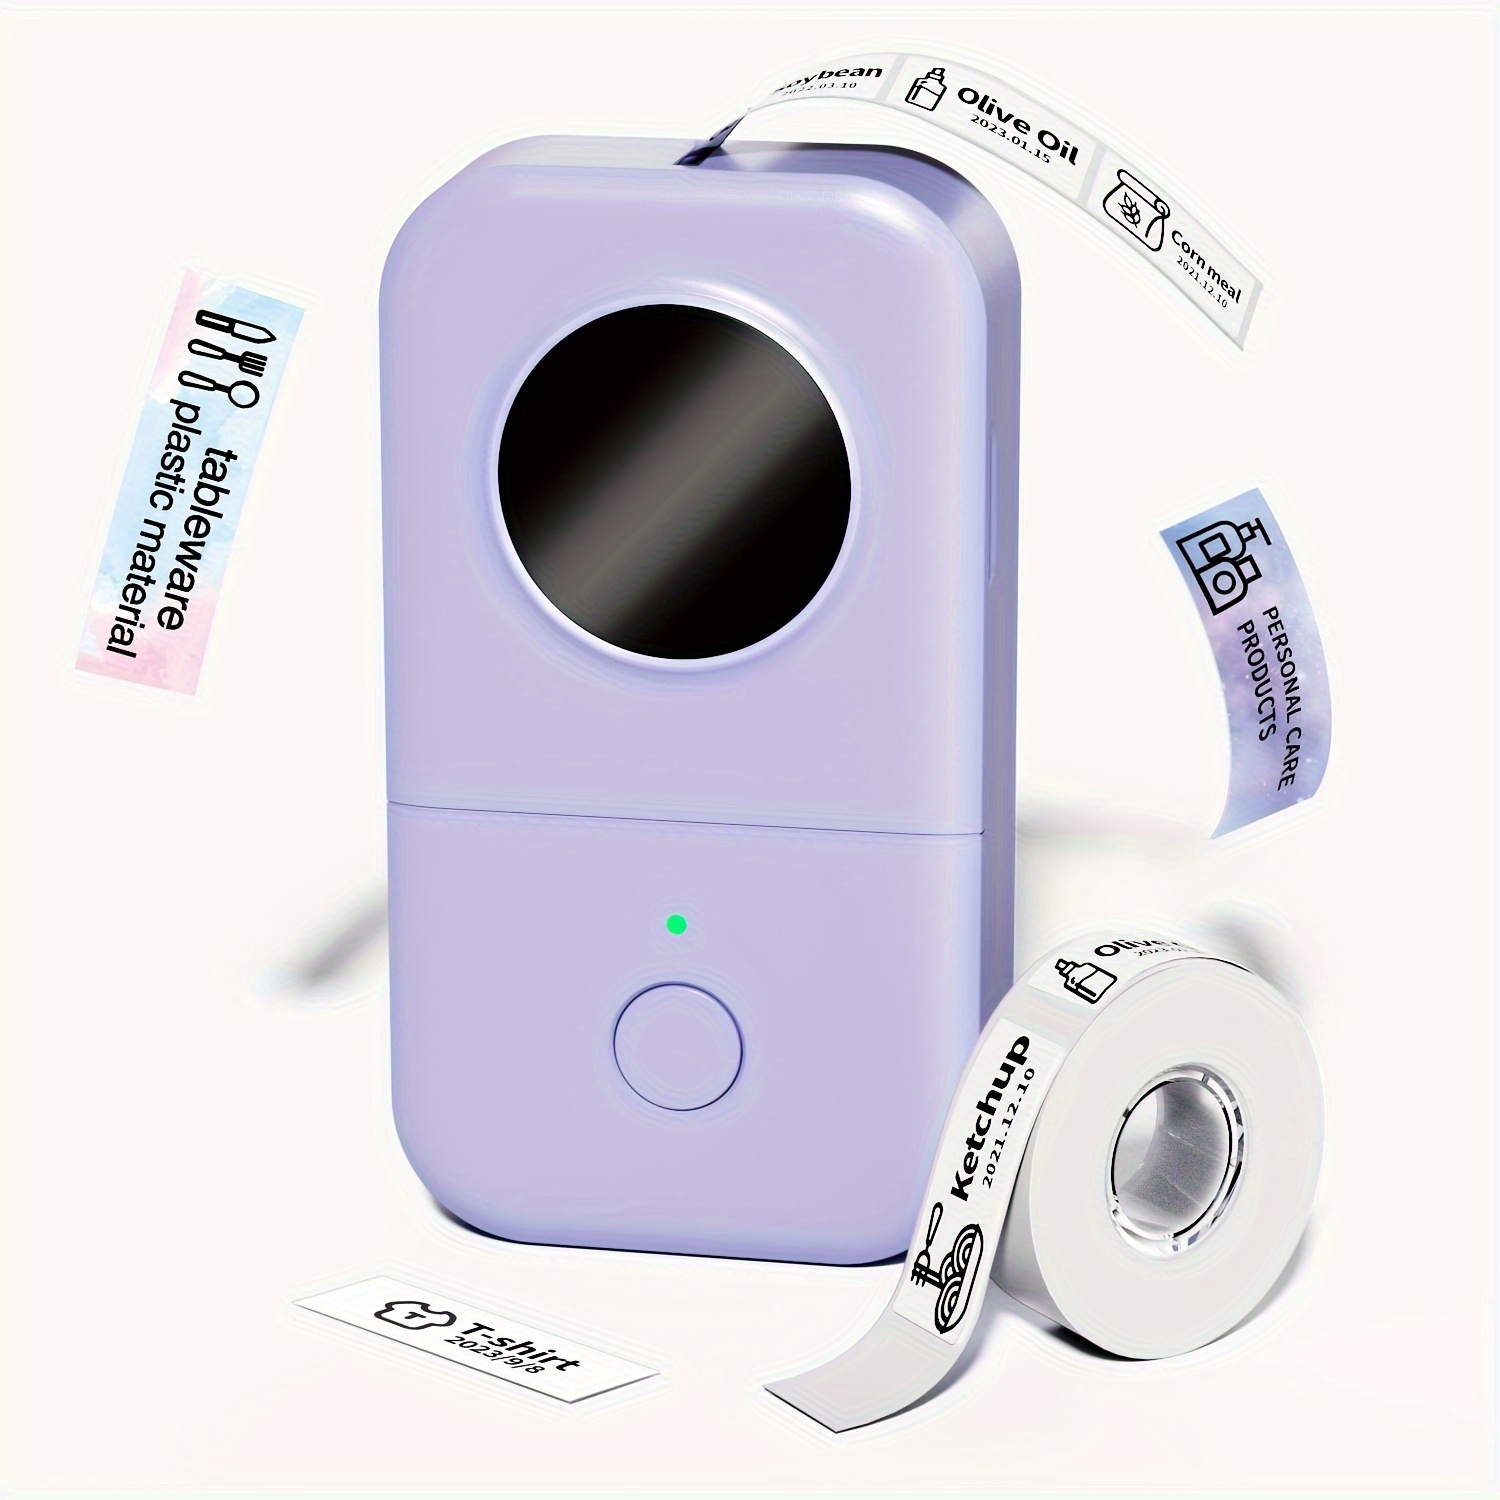 Phomemo D30 Mini Label Printer - REVIEW - Organise Your Life!